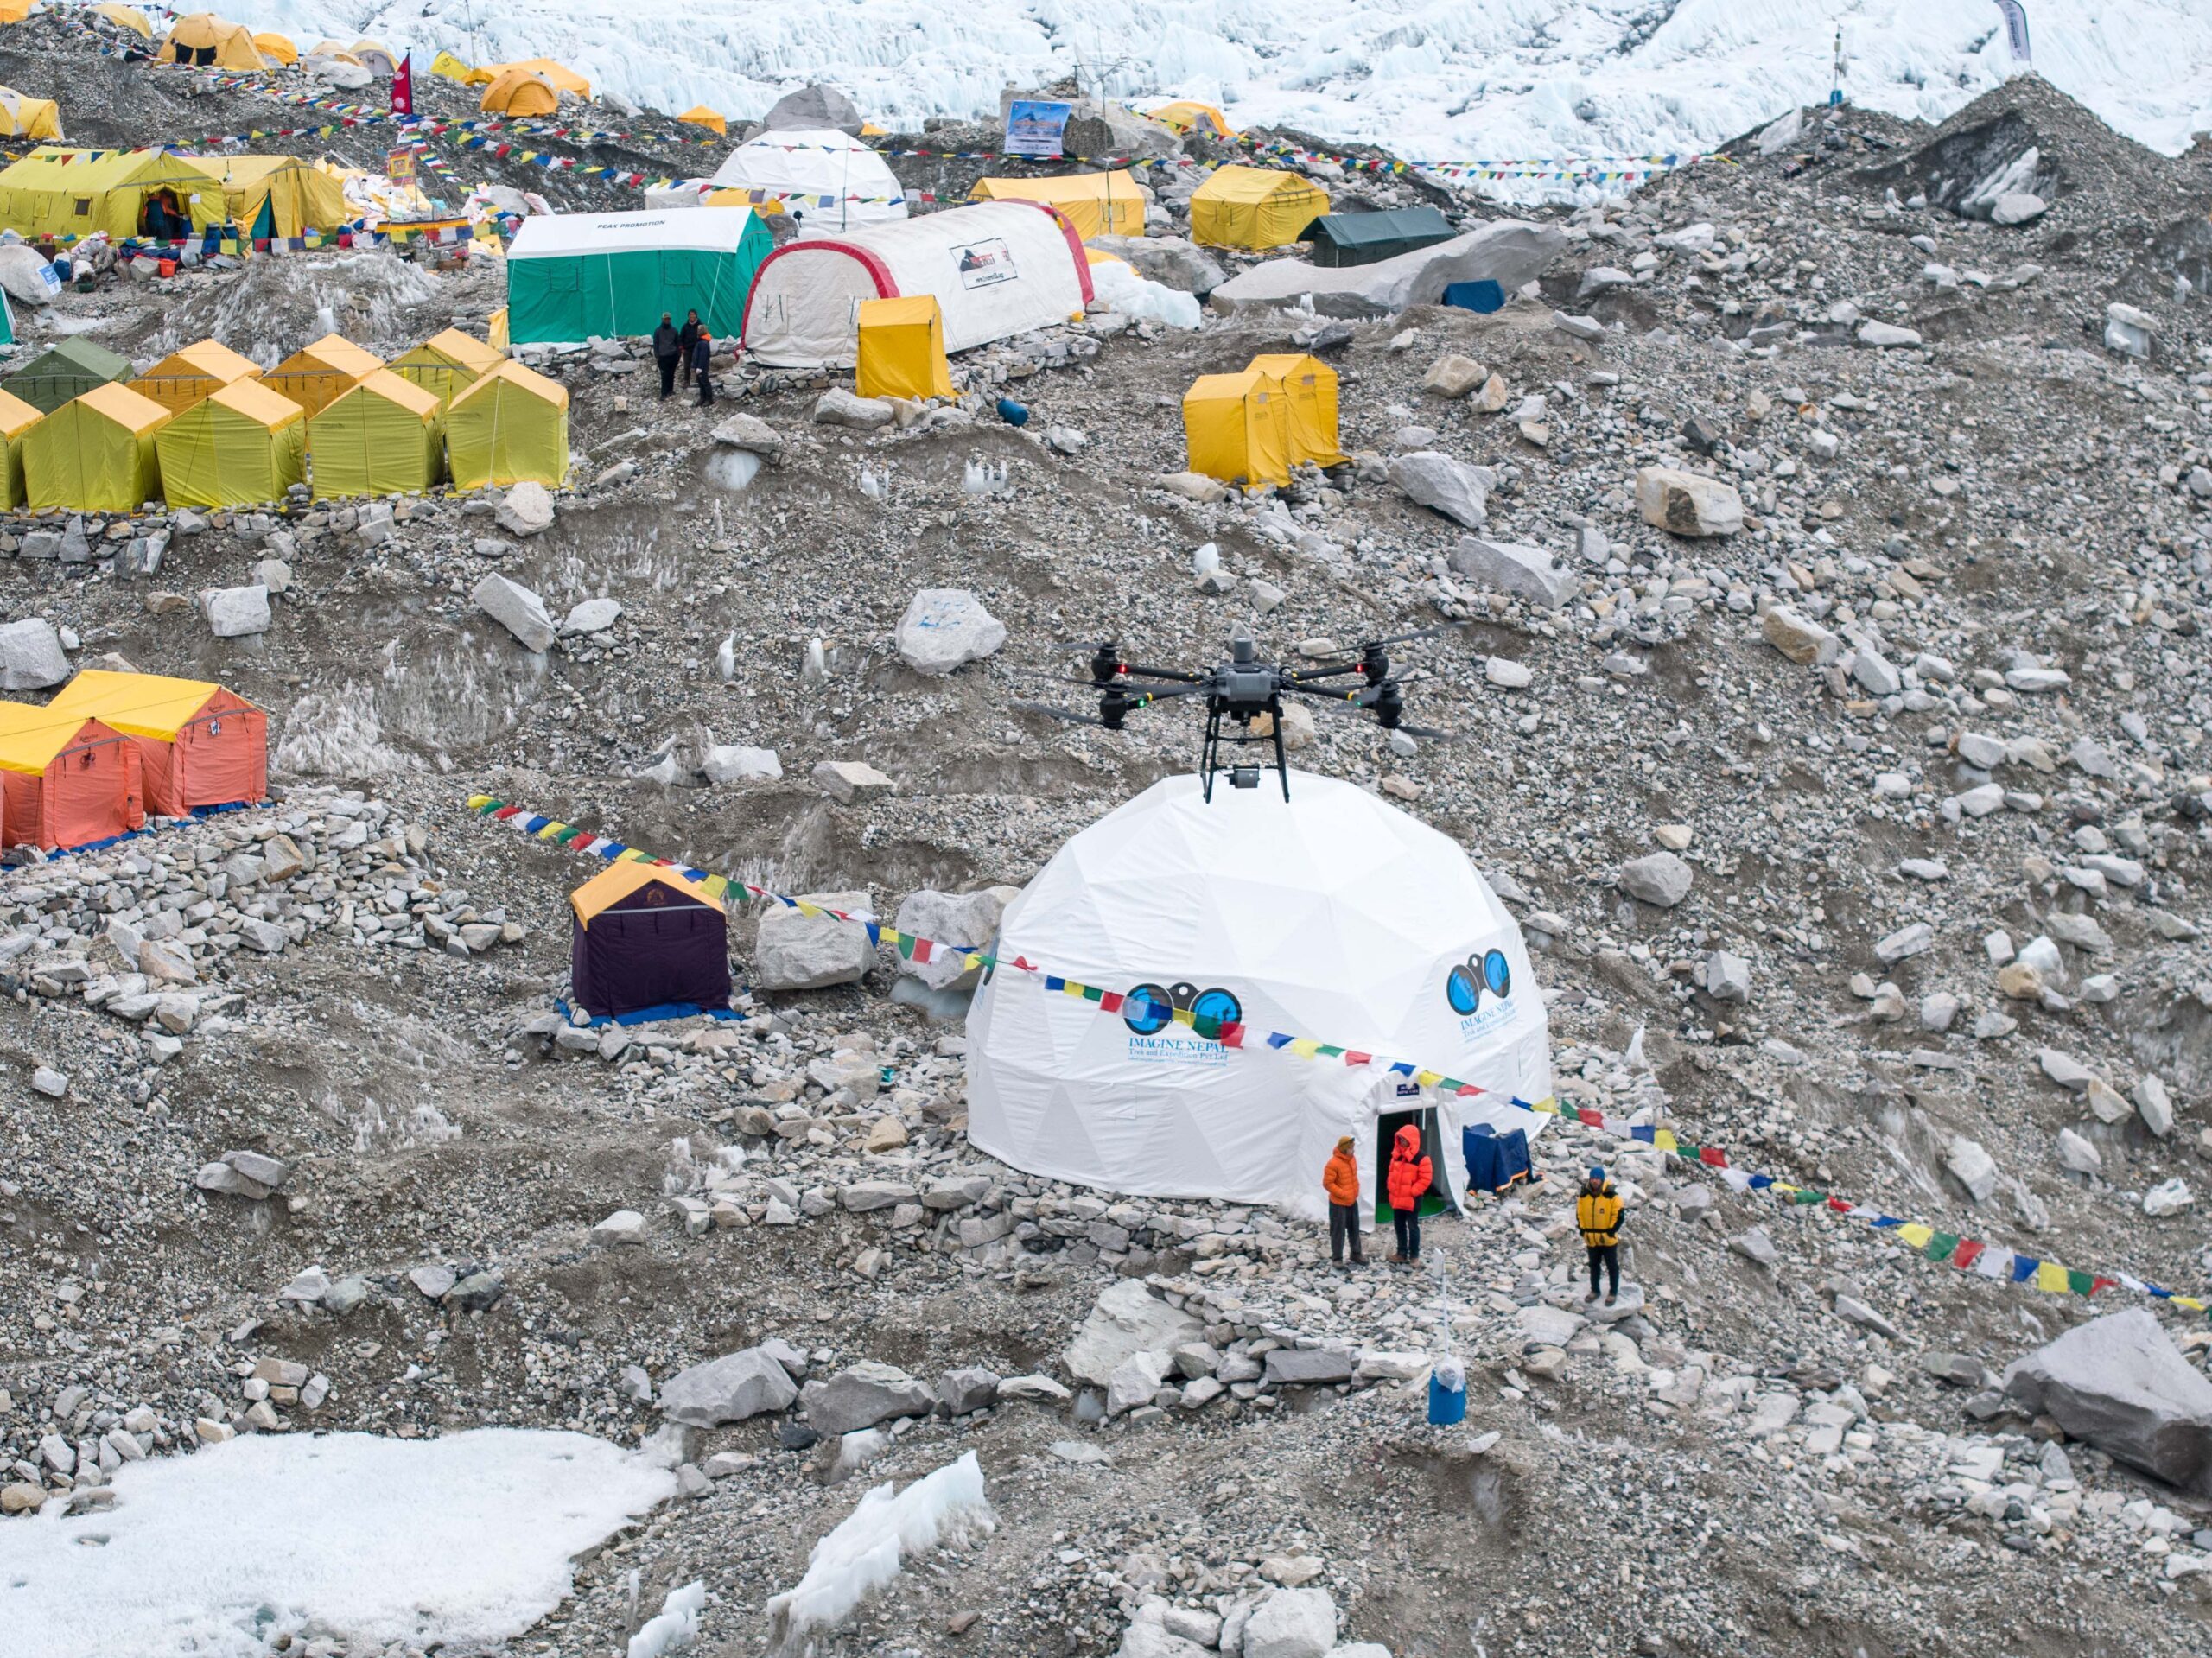 DJI Supply Drone on Mount Everest